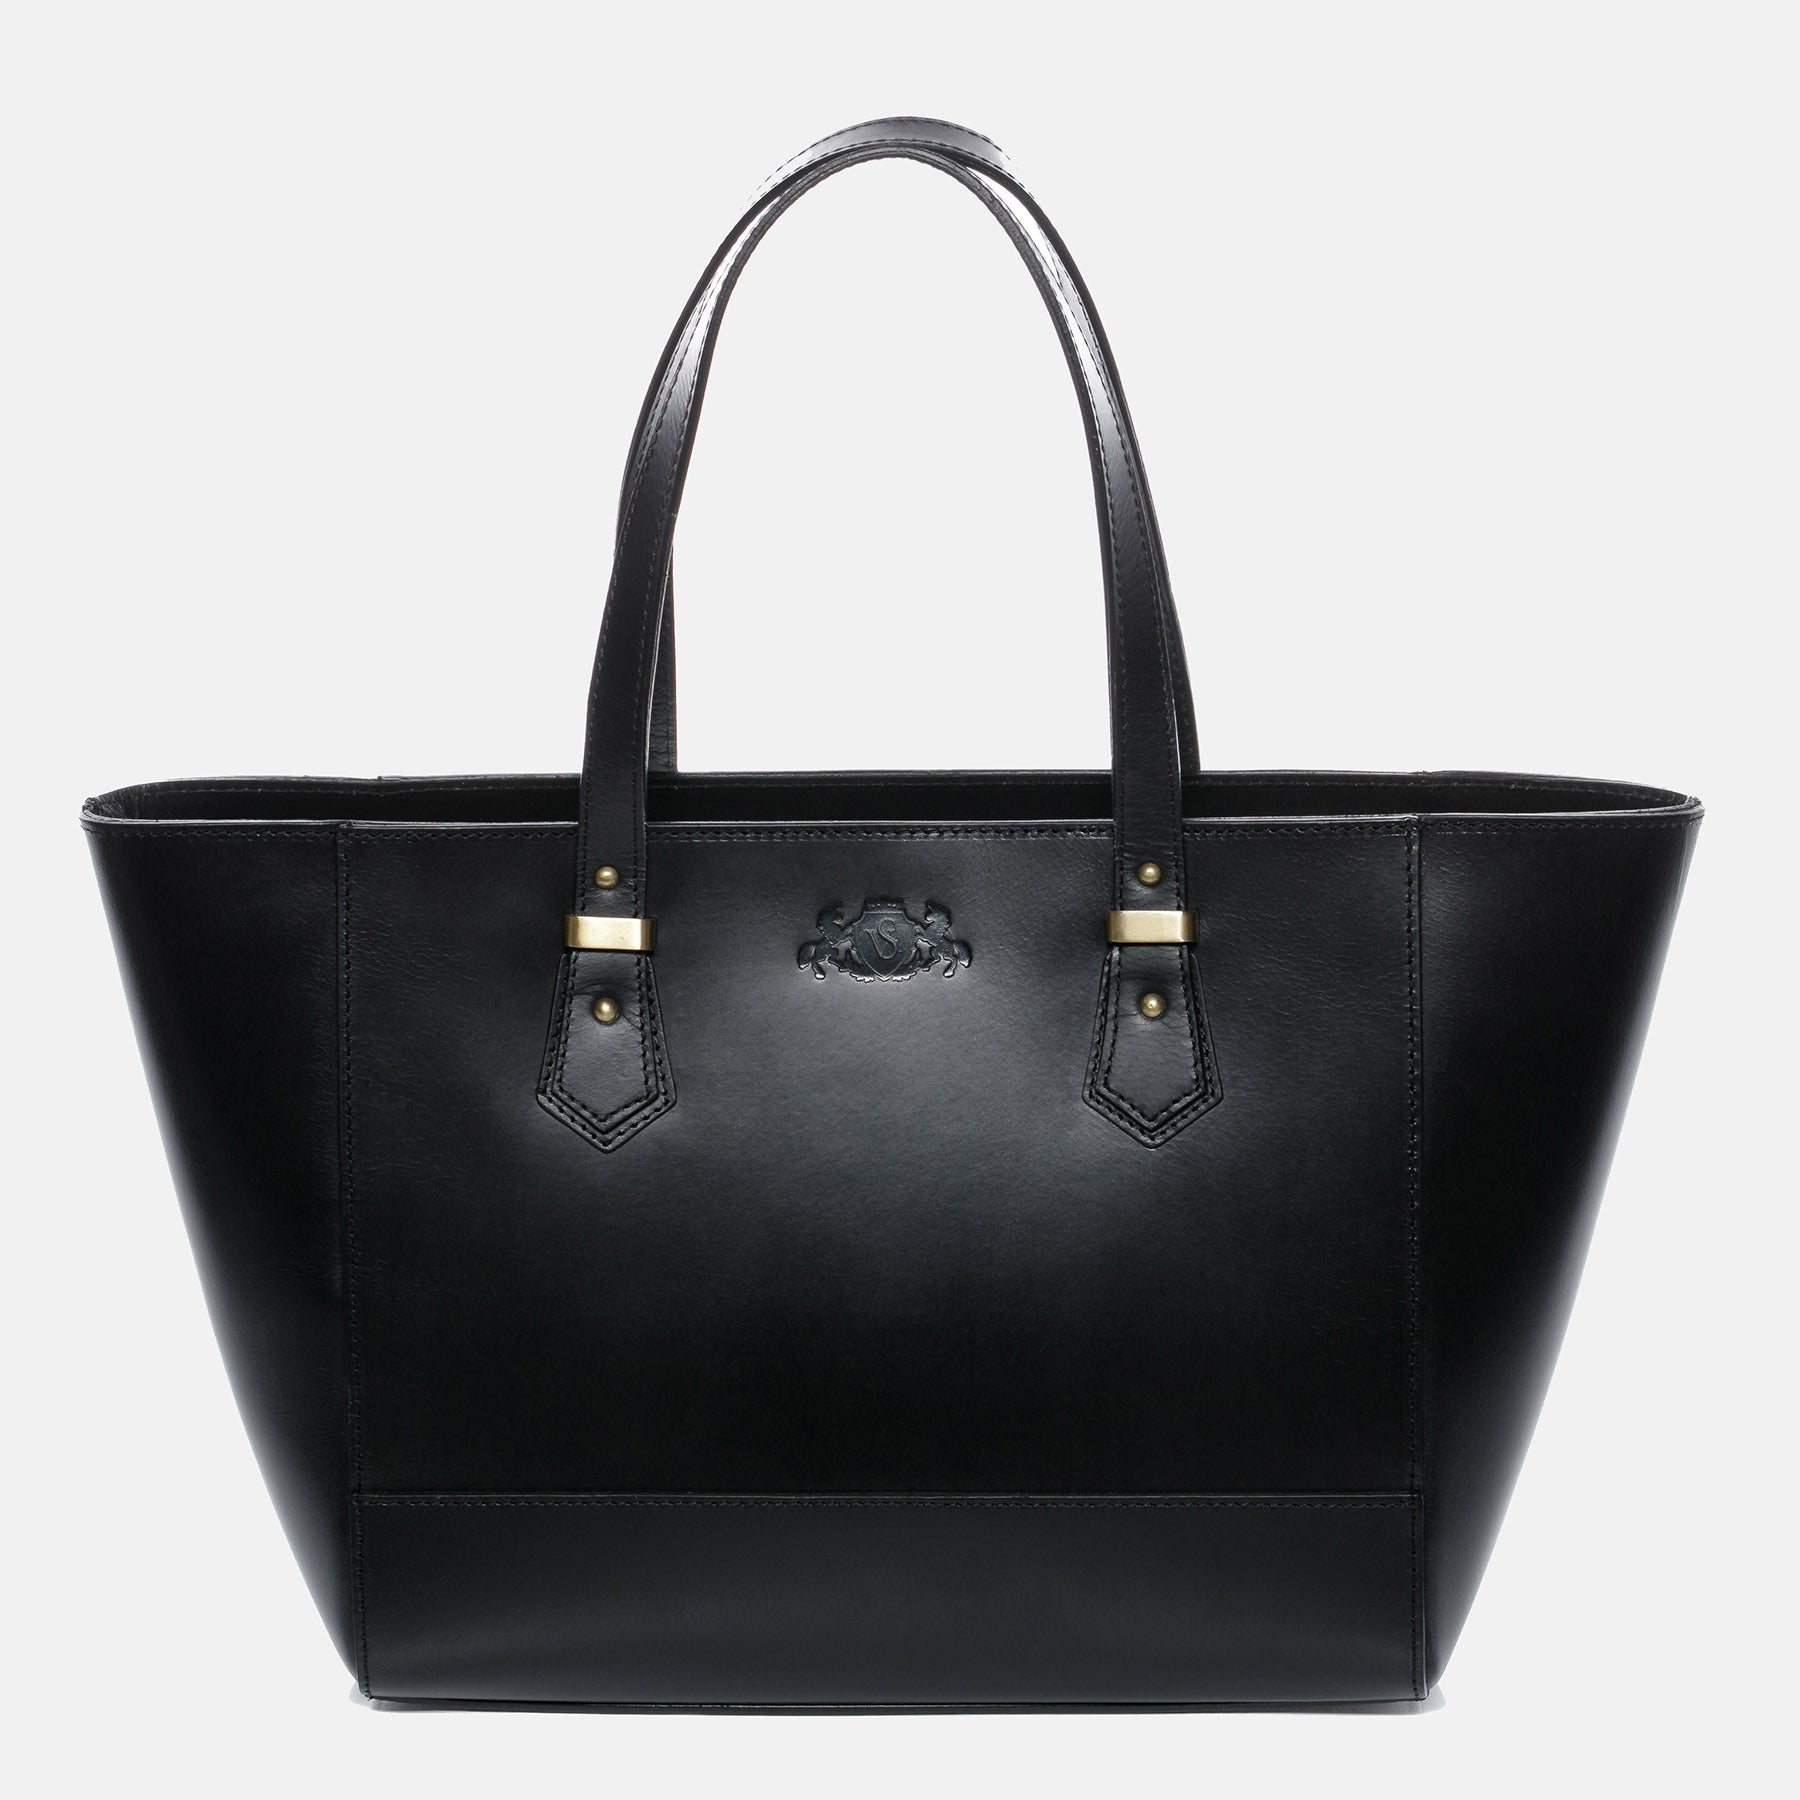 Handbag TRISH saddle leather black